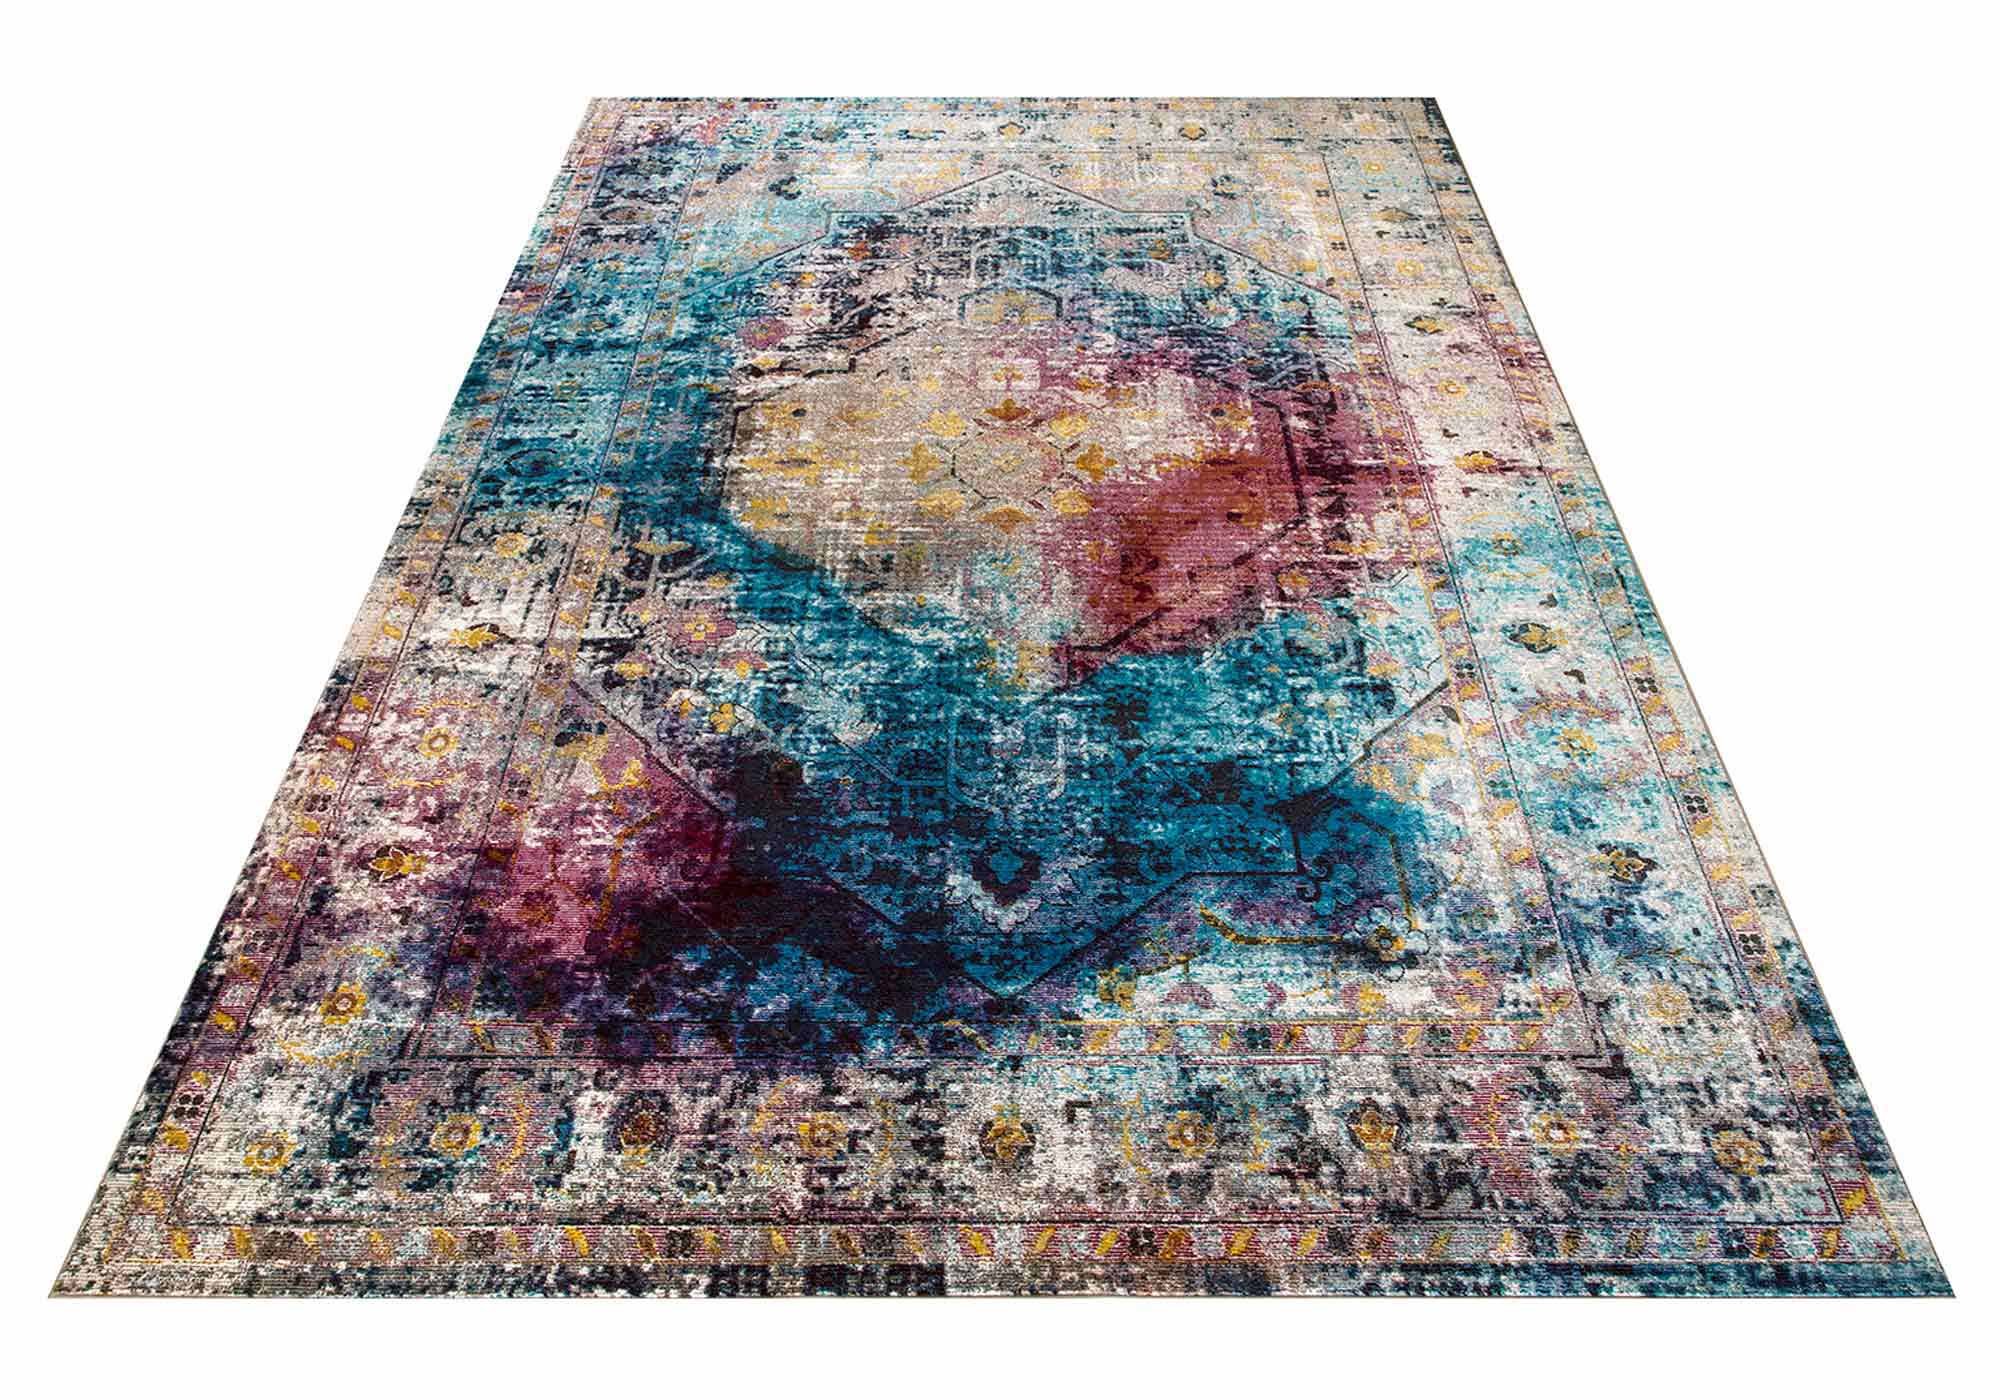 Festival Teppich 160 x 230 cm - mehrfarbig - 6 mm Höhe - Picasso 602